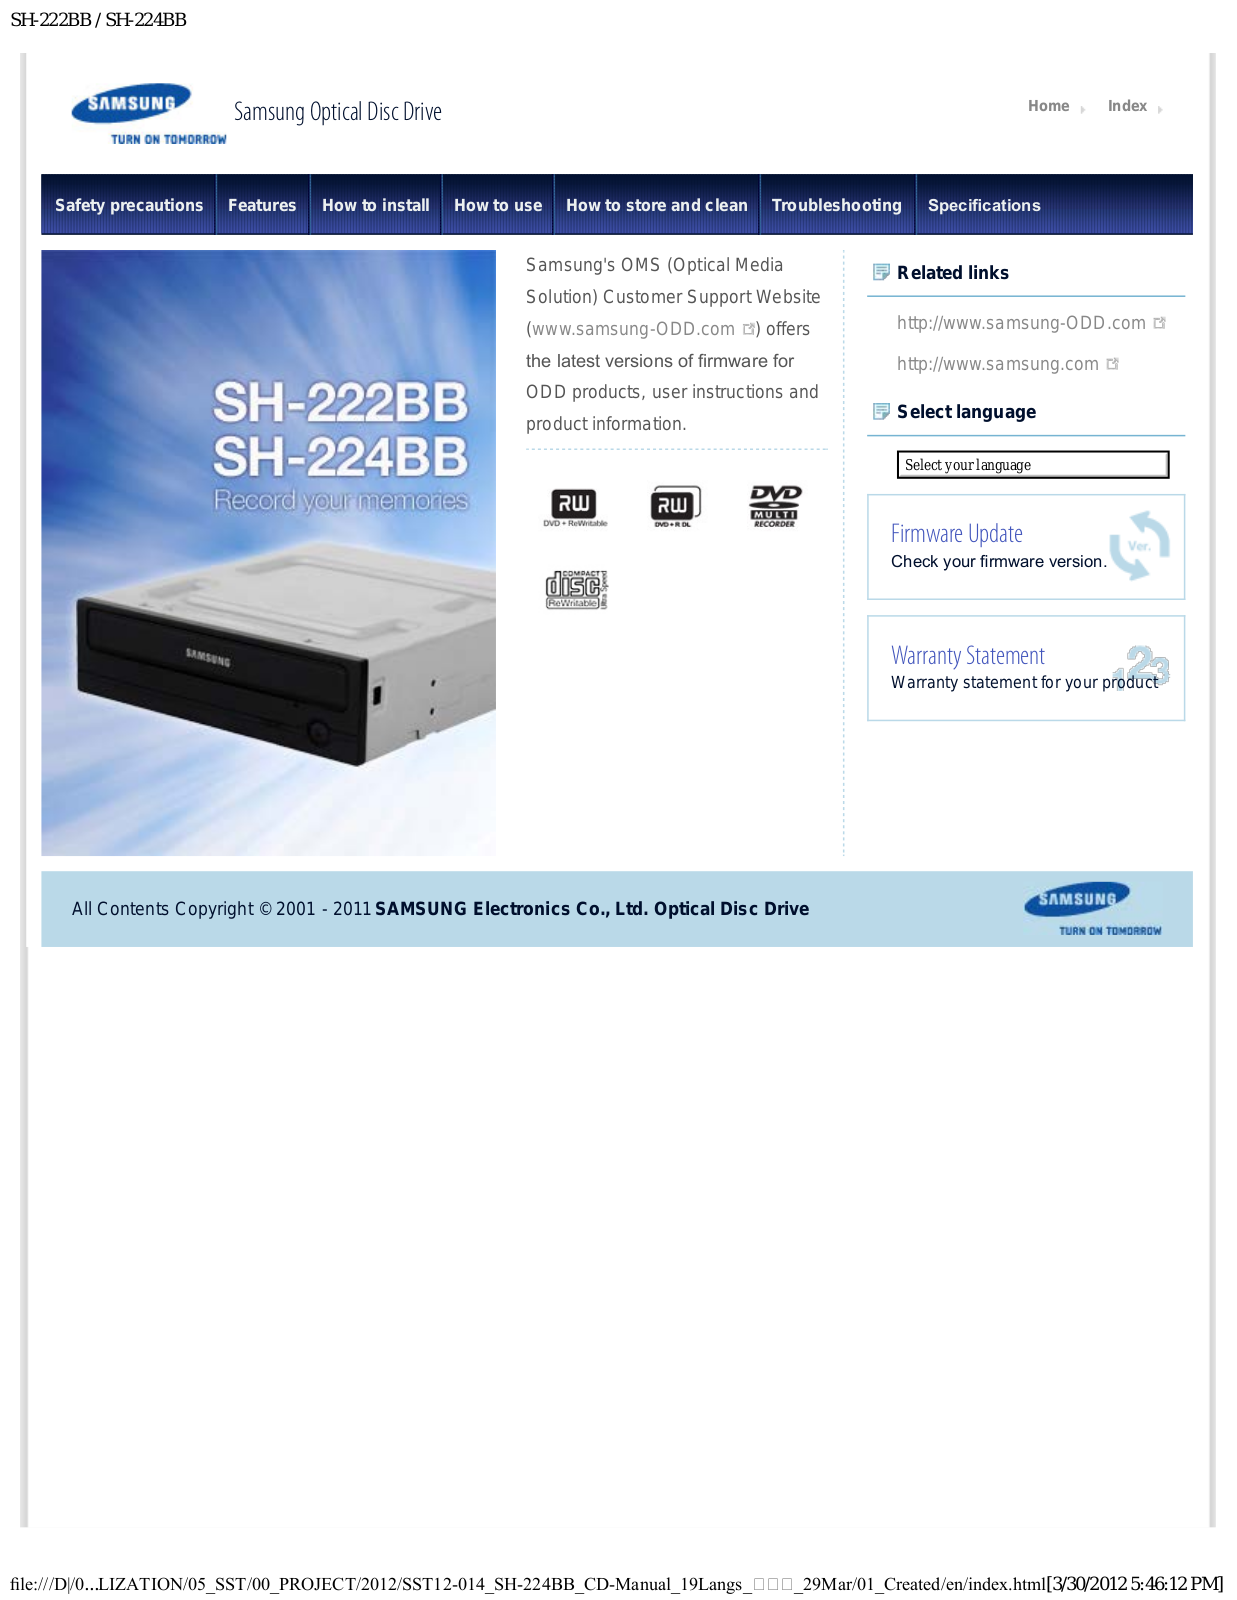 Samsung SH-224BB User Manual